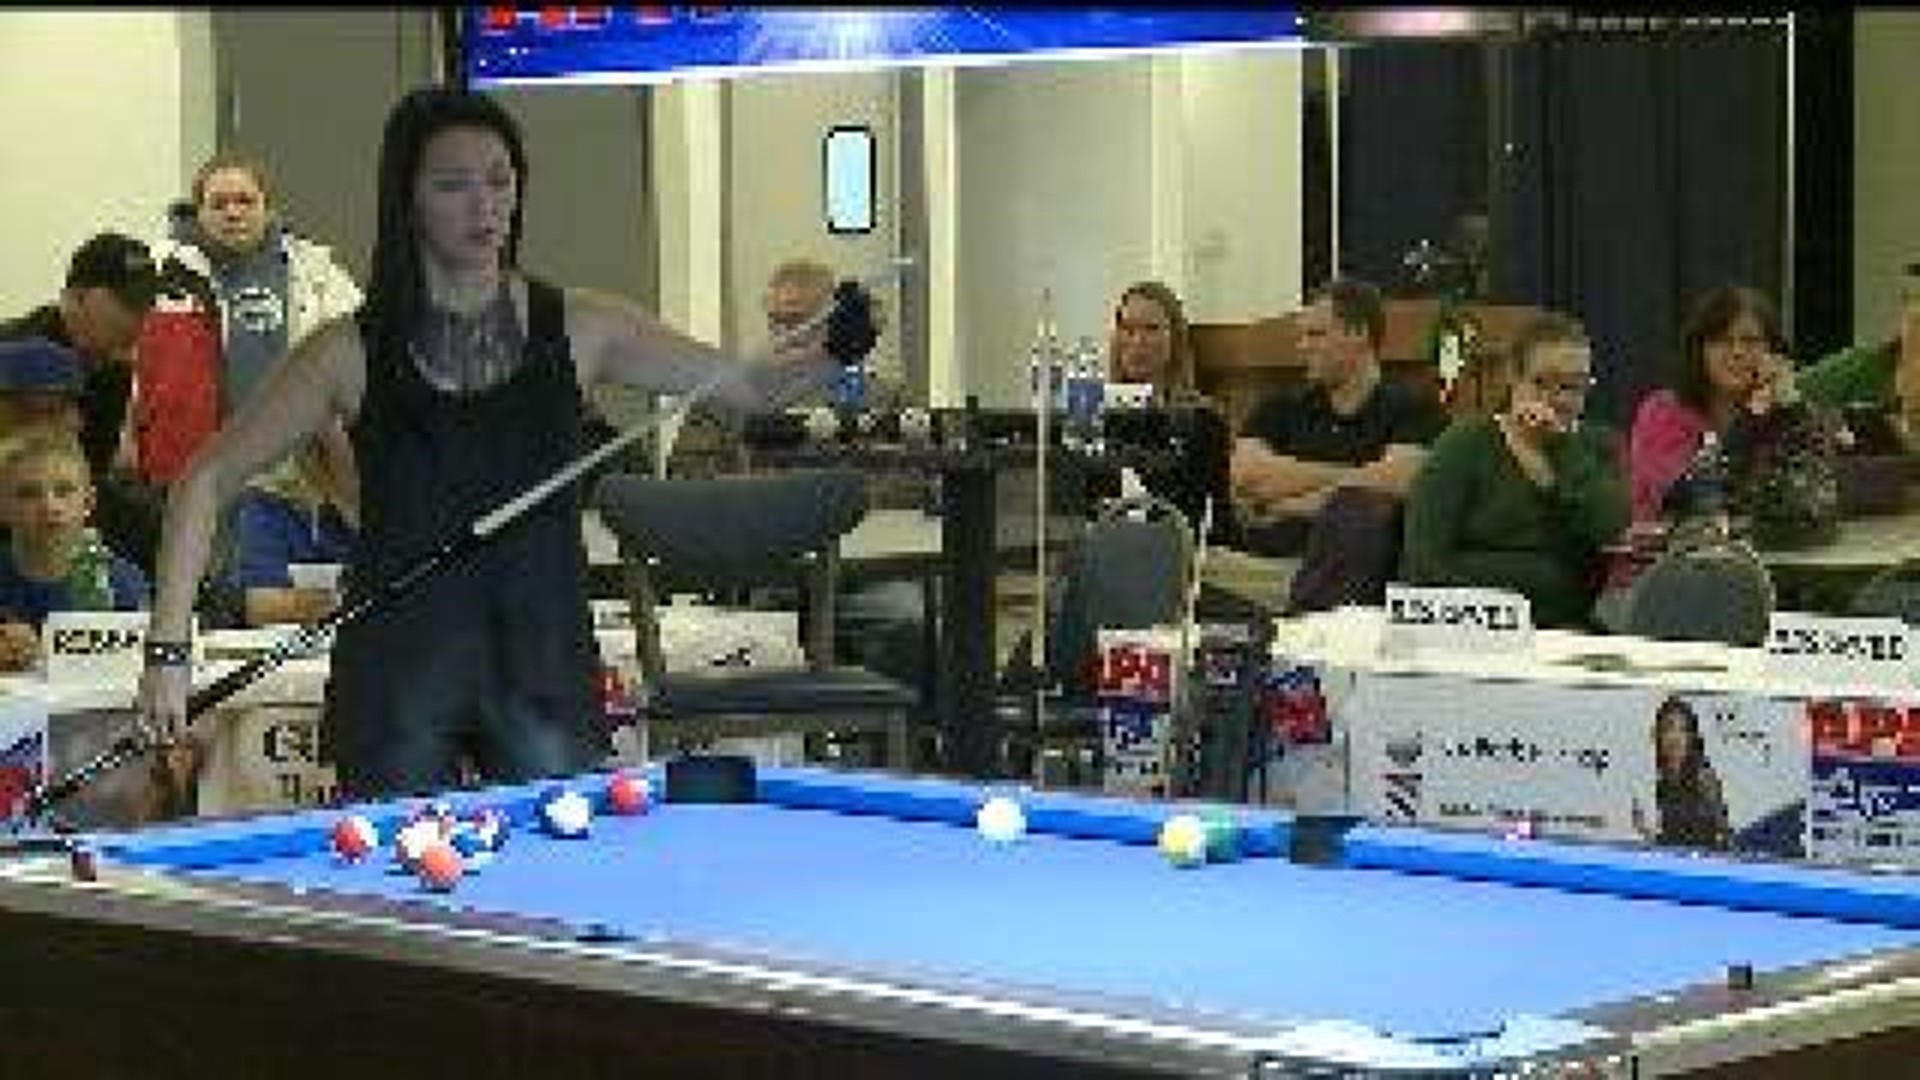 Black Widow brings pool tricks to Davenport